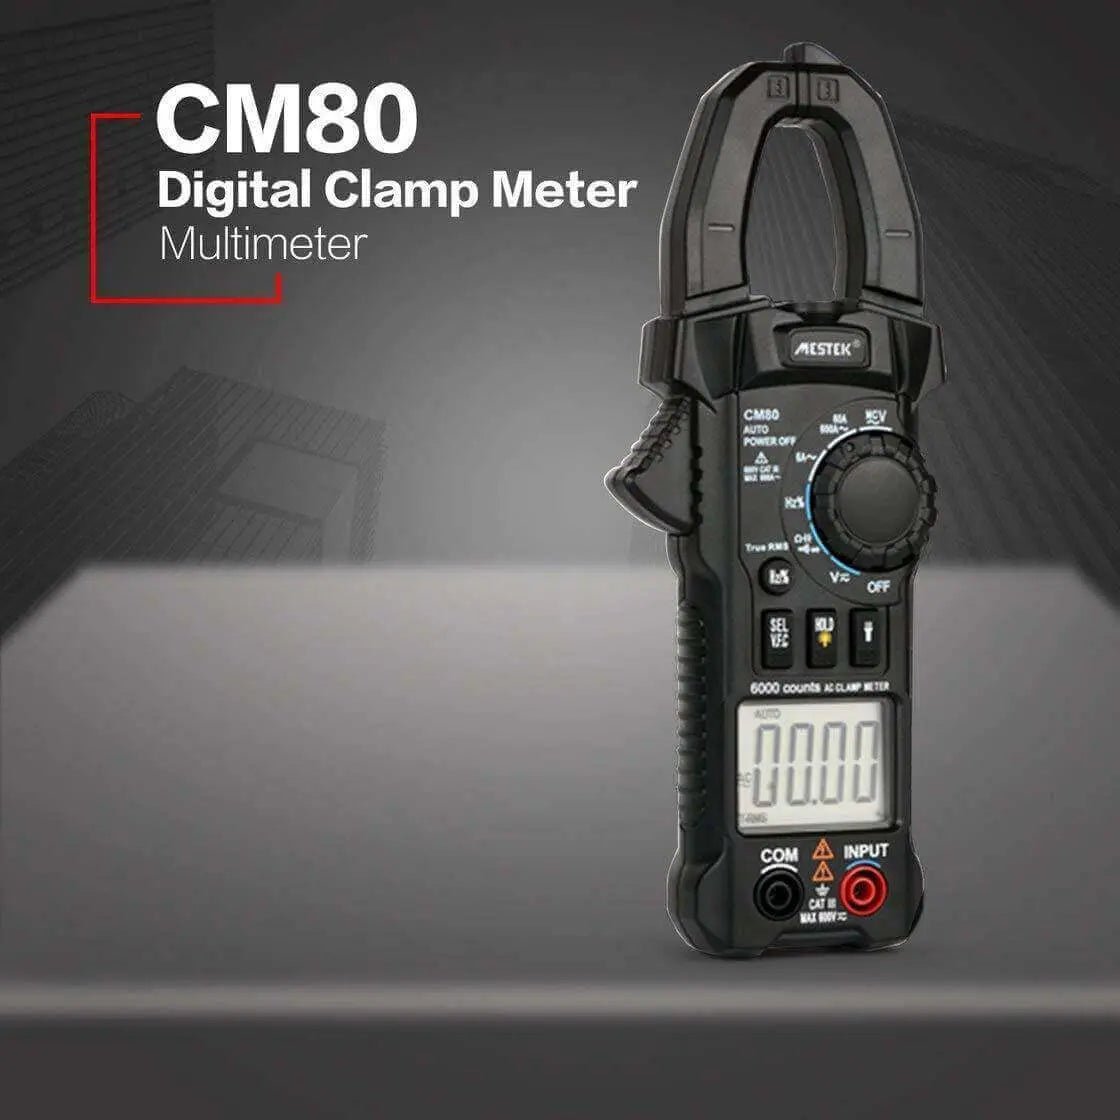 Clamp Meter MESTEK CM80 AC كلامب ميتر مستك العراق - سوق عگد النصارى